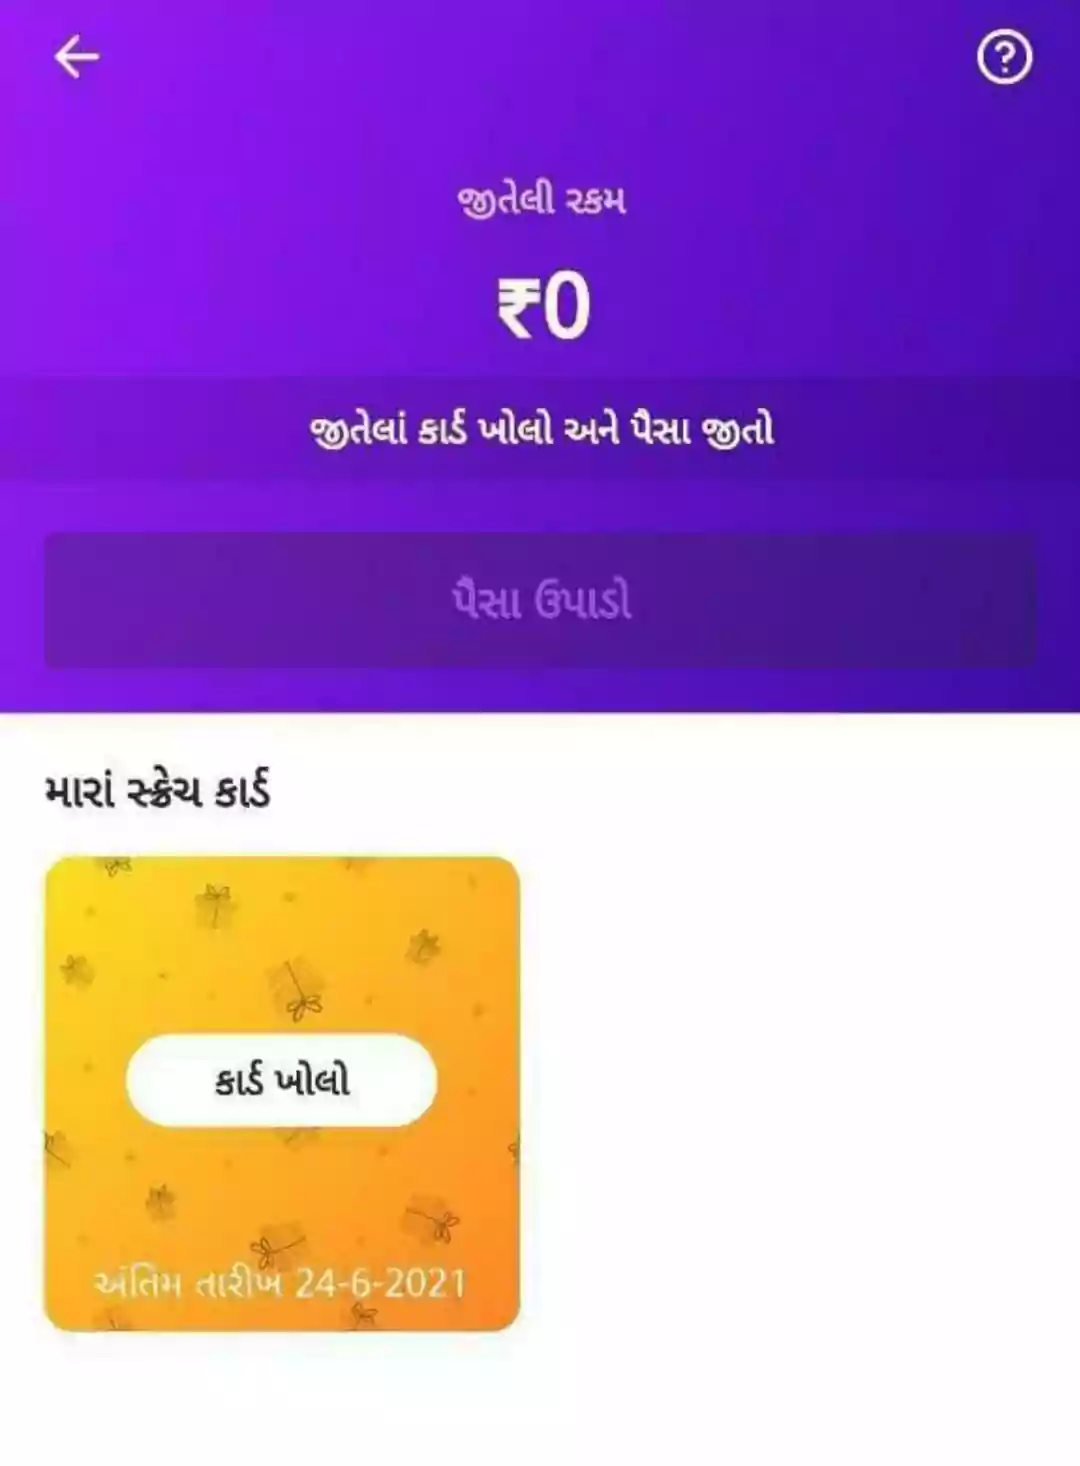 The Scan QR Code To Win ₹10 - ₹1,00,000 Cash Prize For Divya Bhaskar App